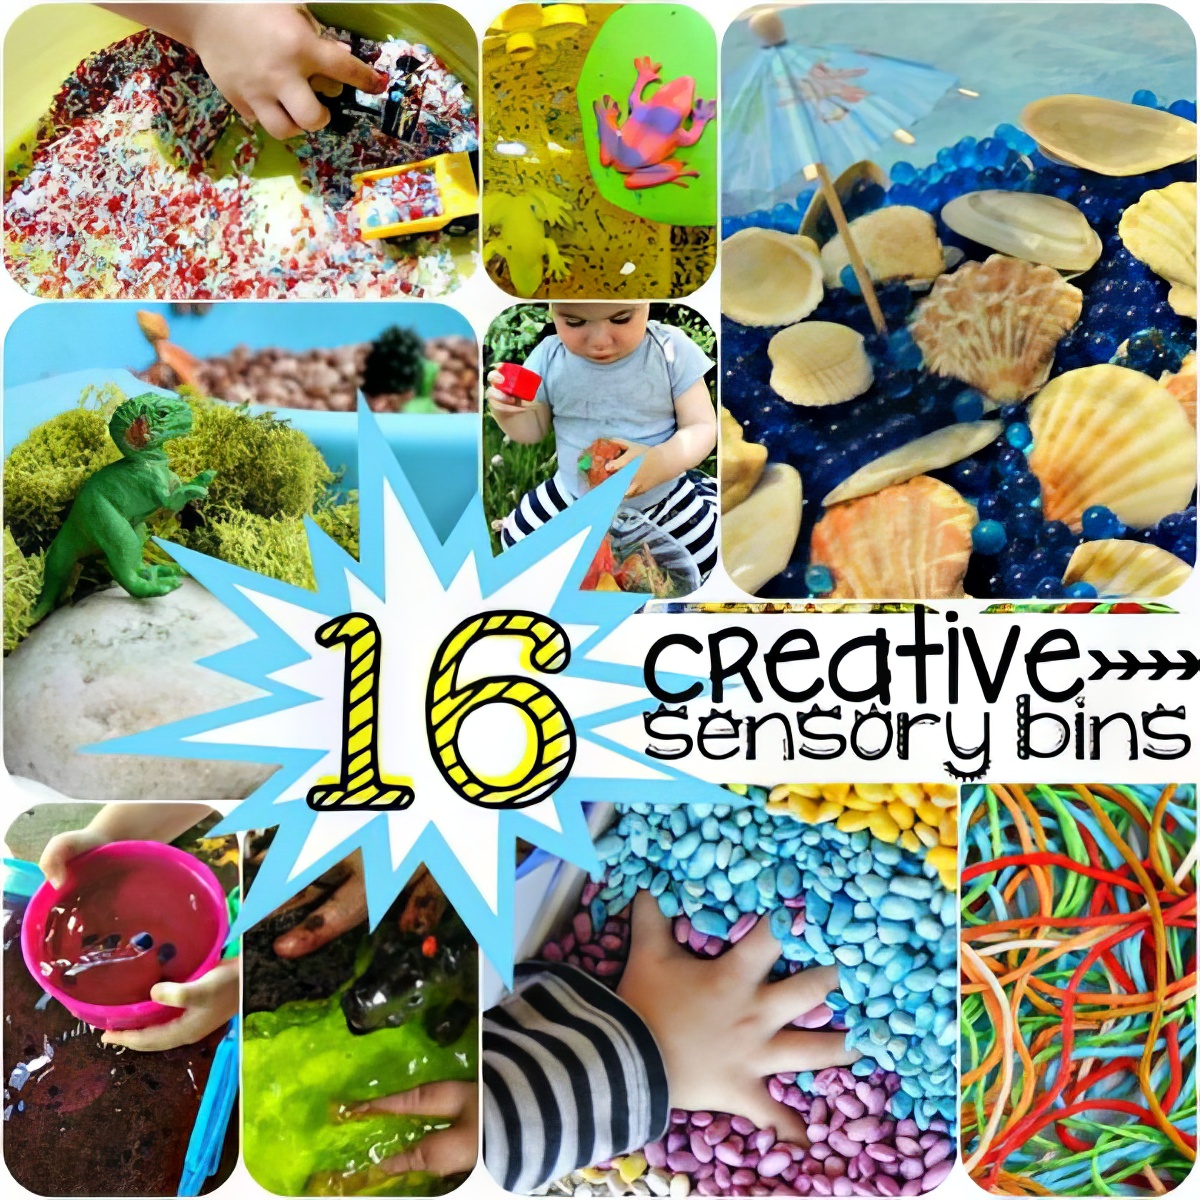 16 creative sensory bins from play idea